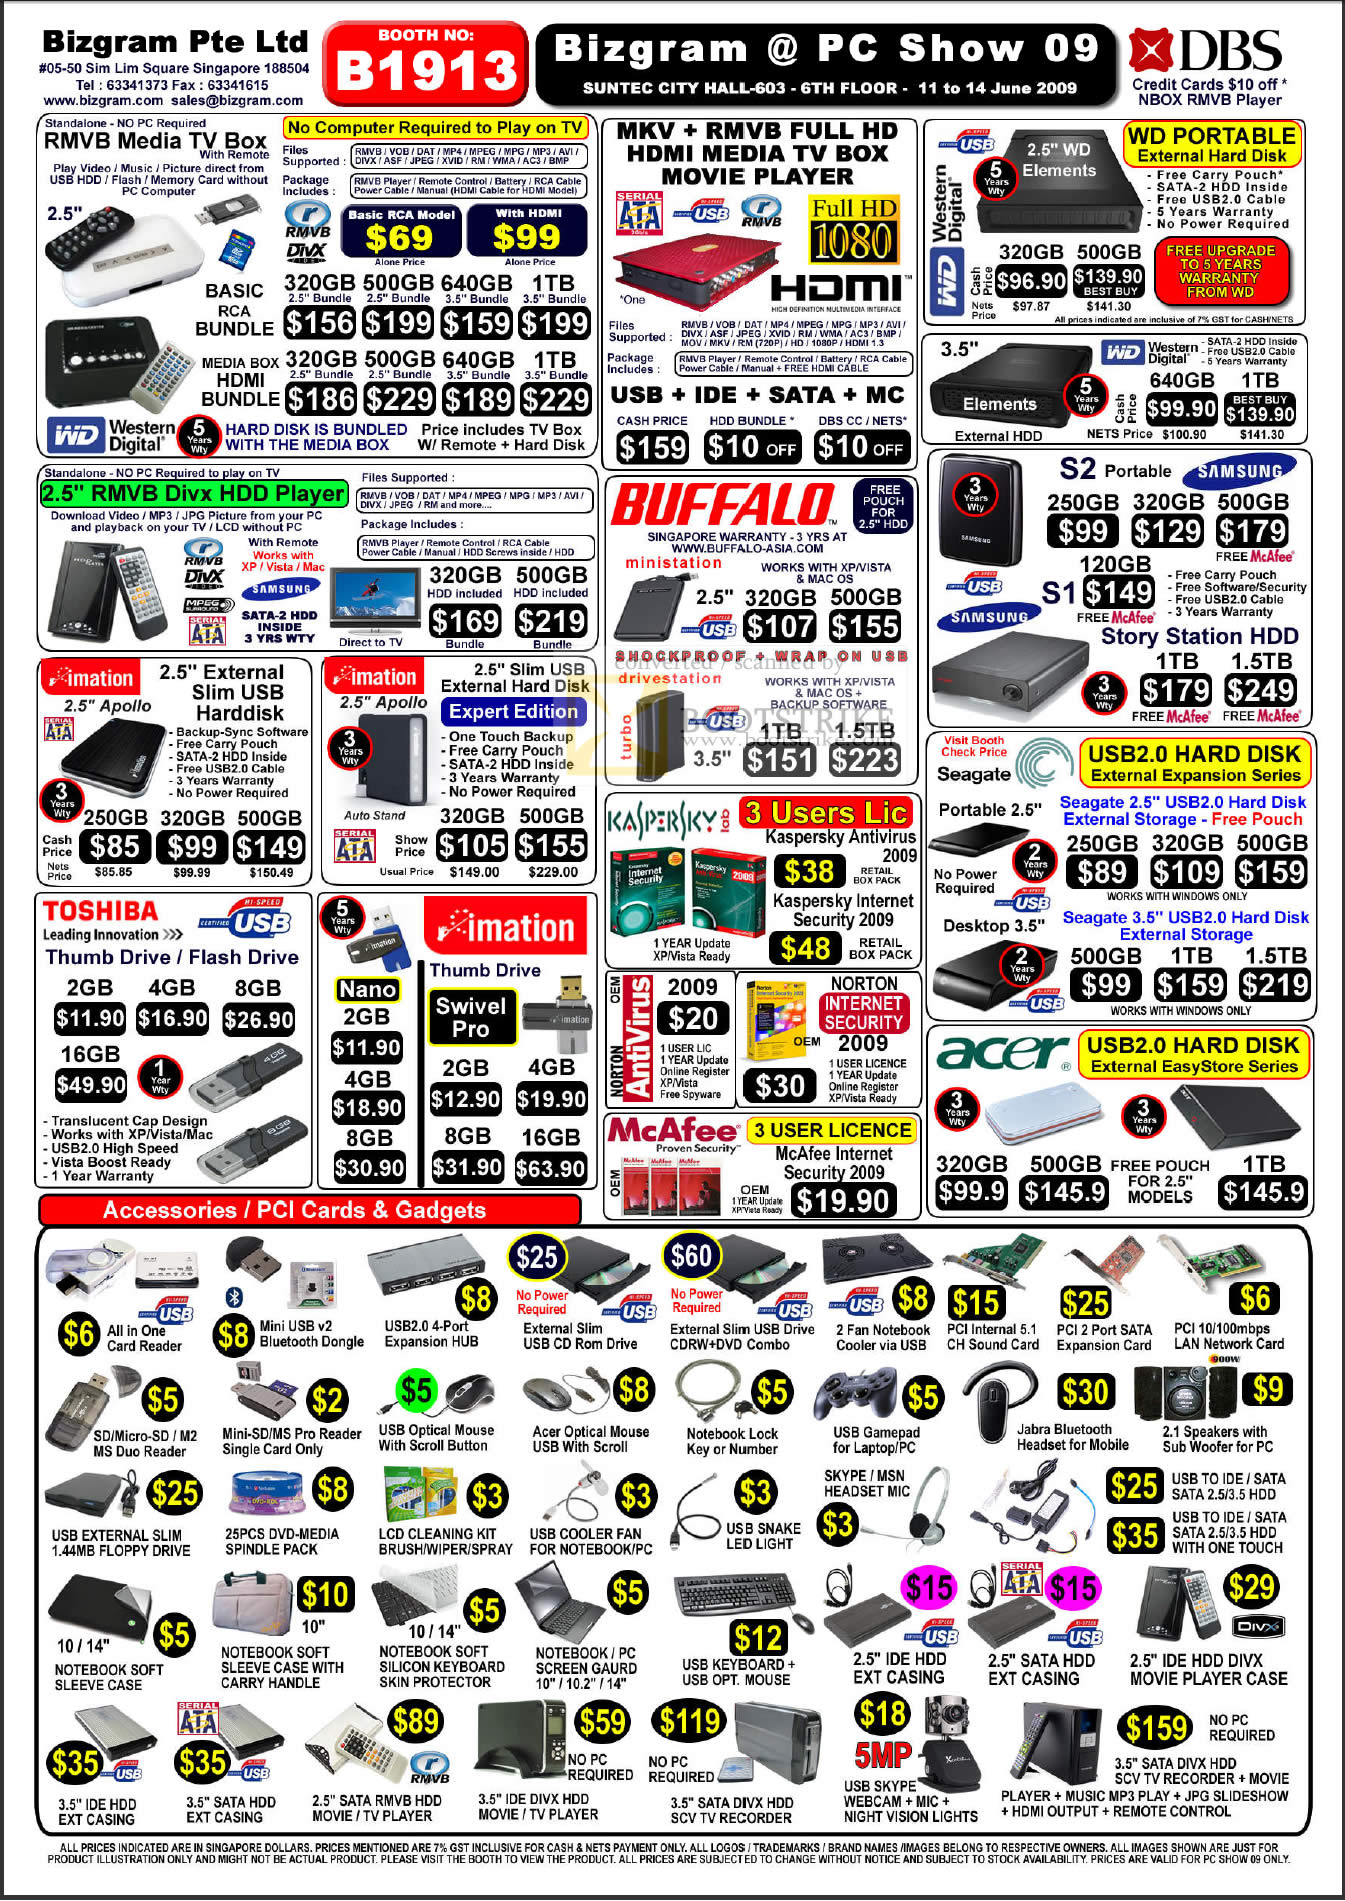 PC Show 2009 Scanned image brochure price list of Bizgram Pricelist ...